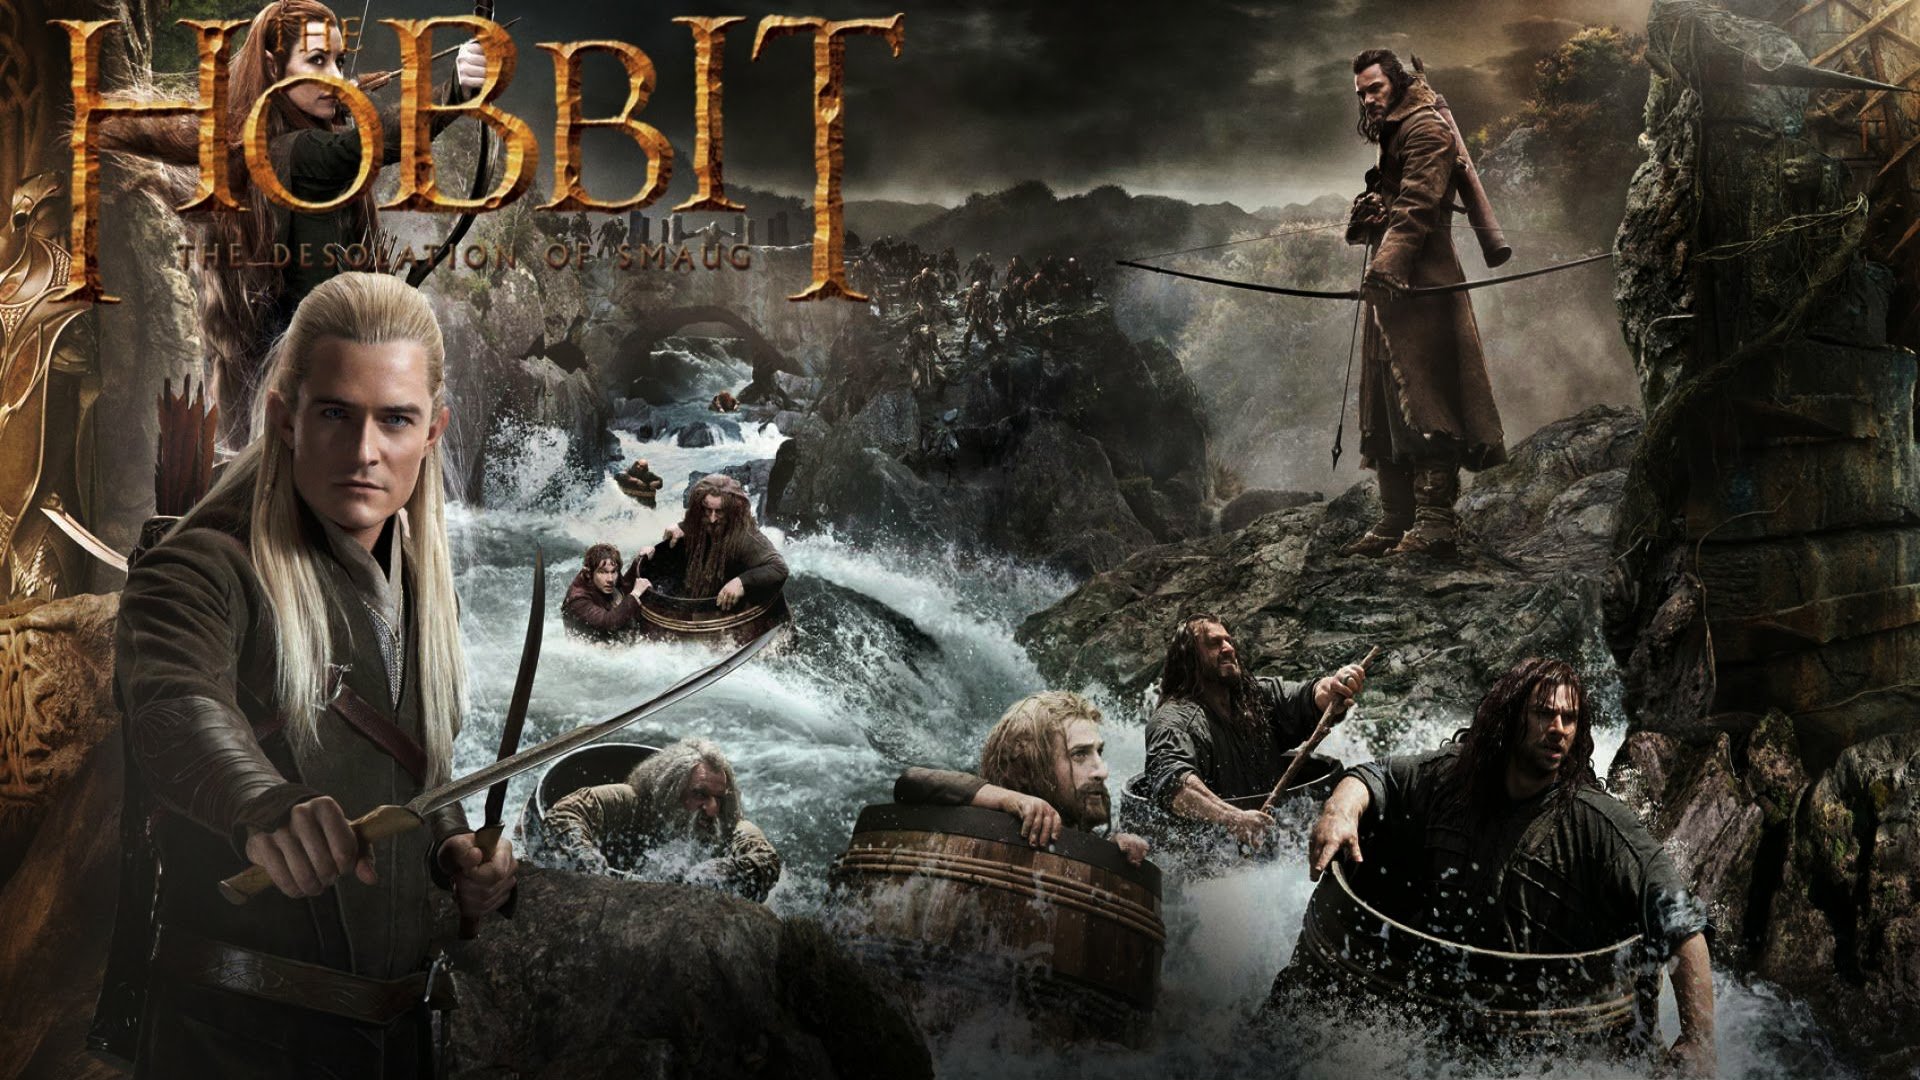 The Hobbit 2013 Wallpaper   Wallpaper High Definition High Quality